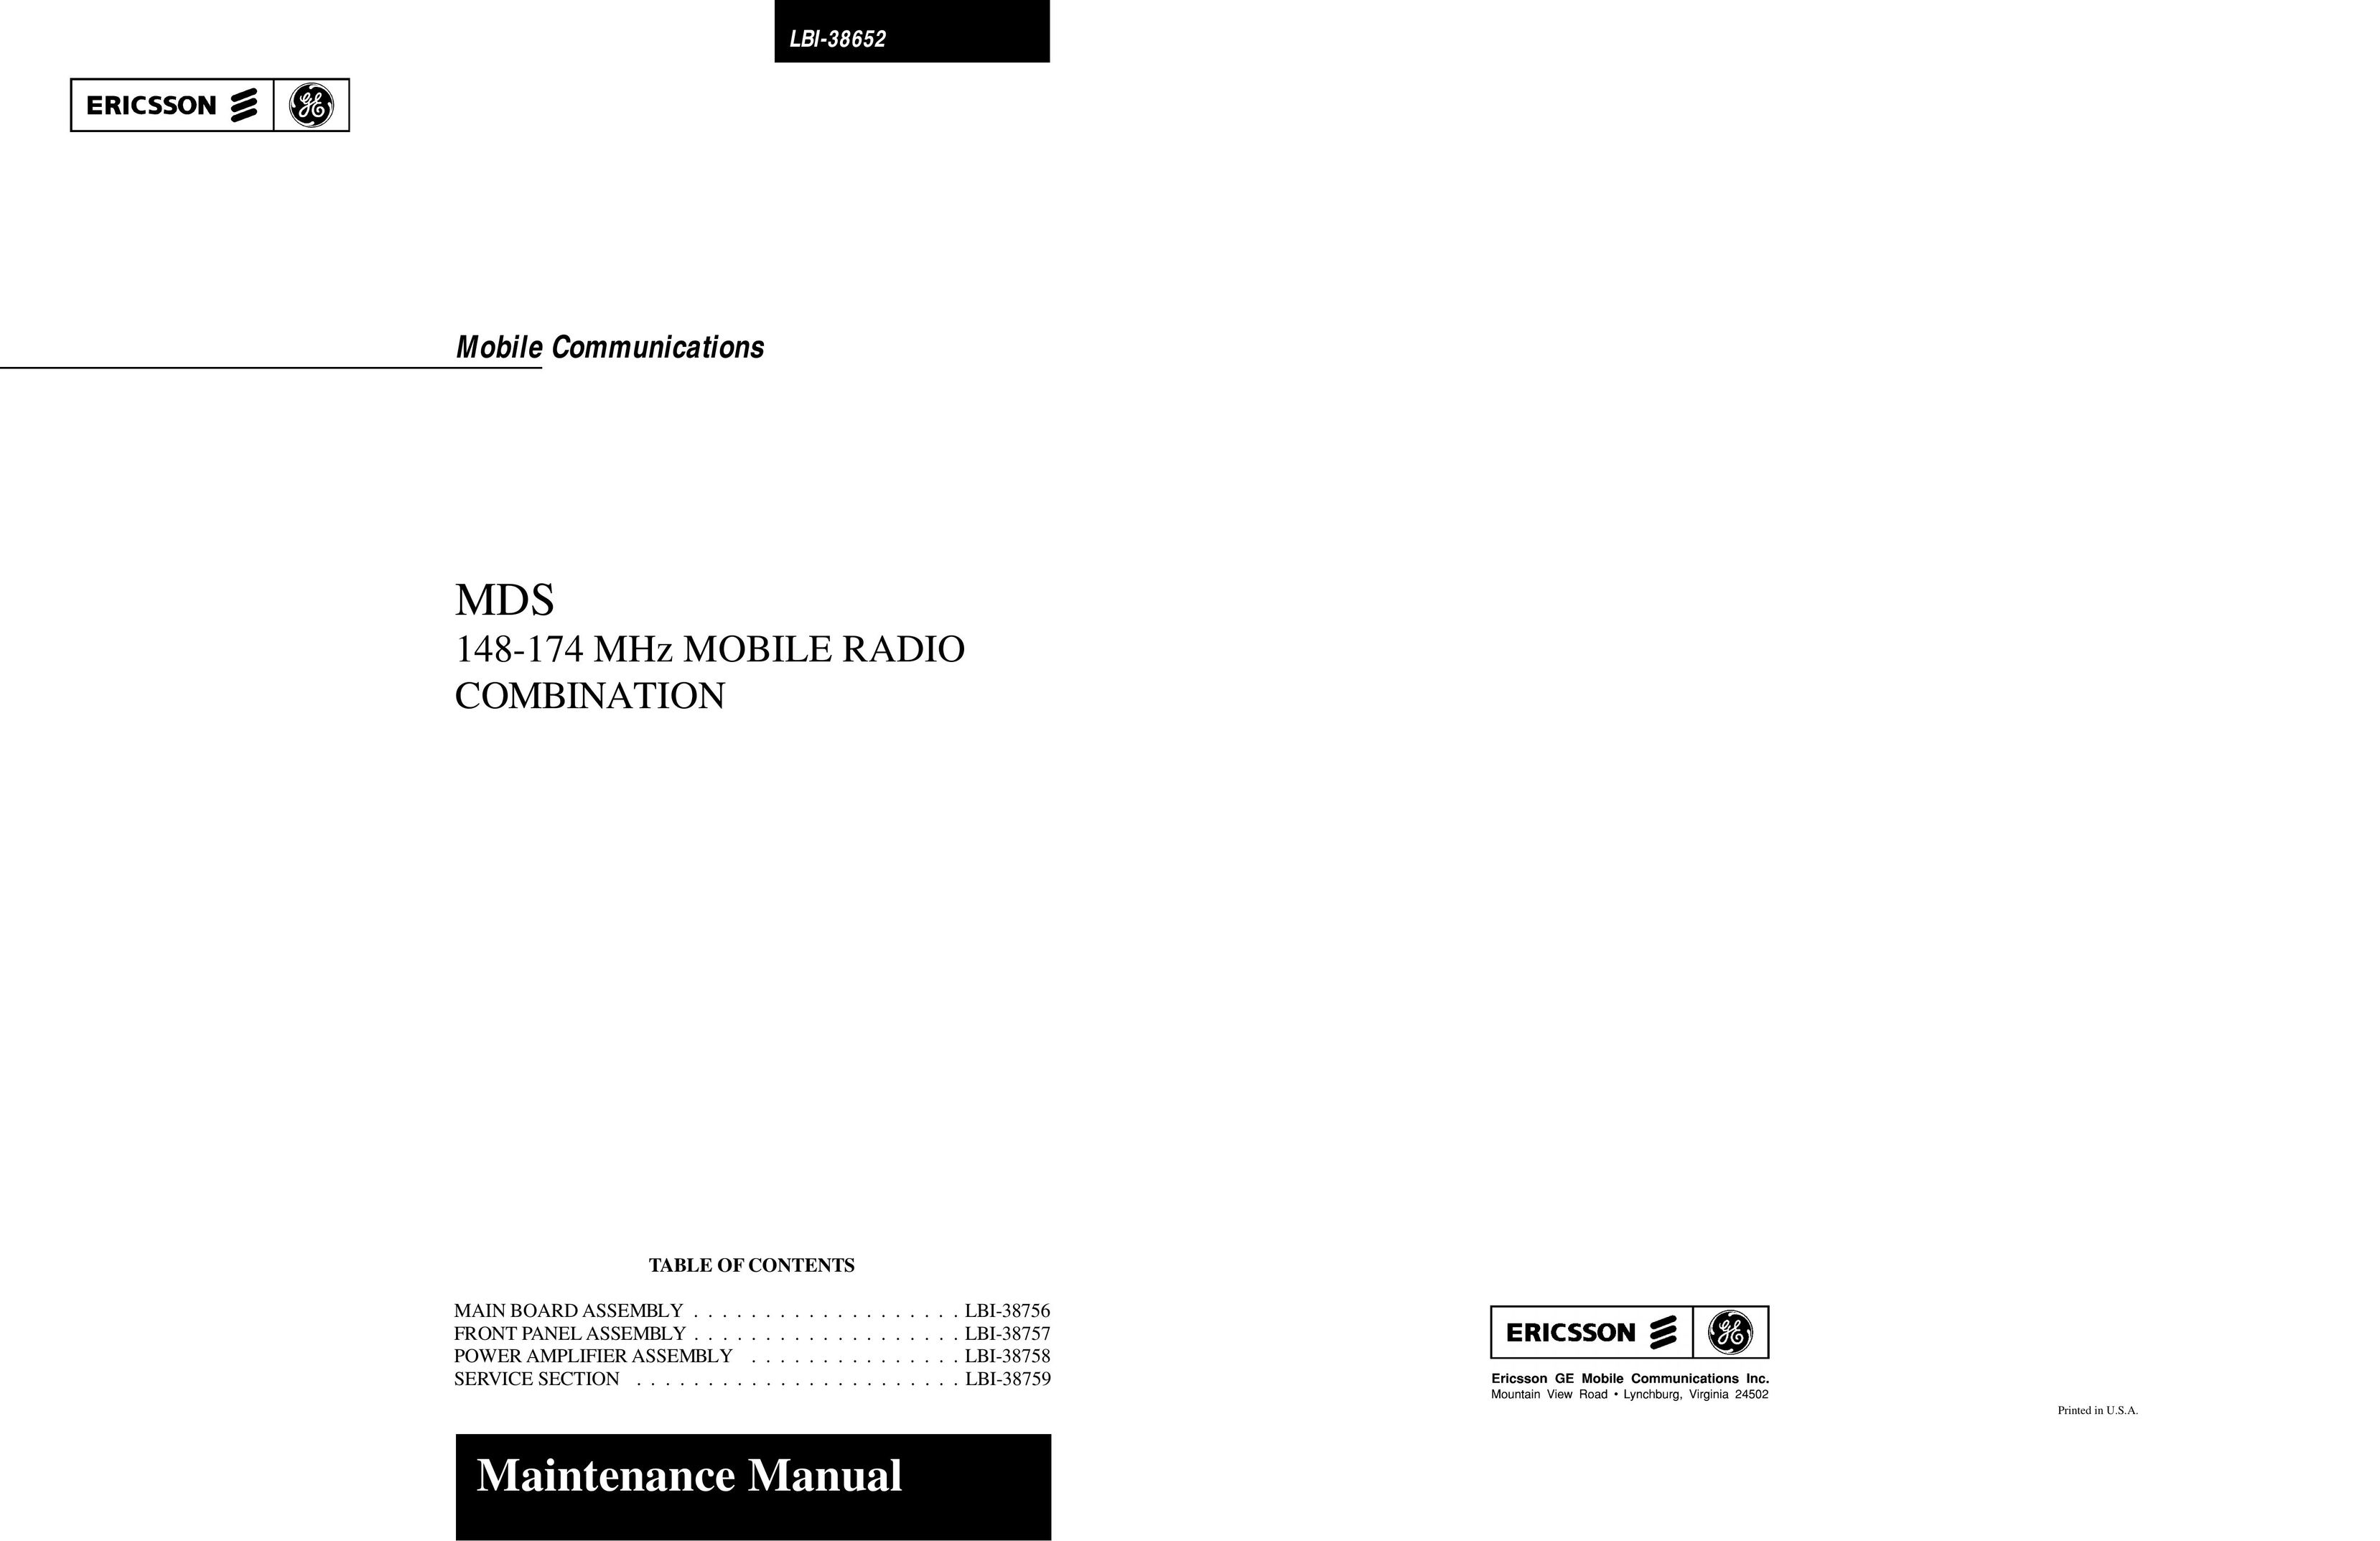 Ericsson LBI-38756 Radio User Manual